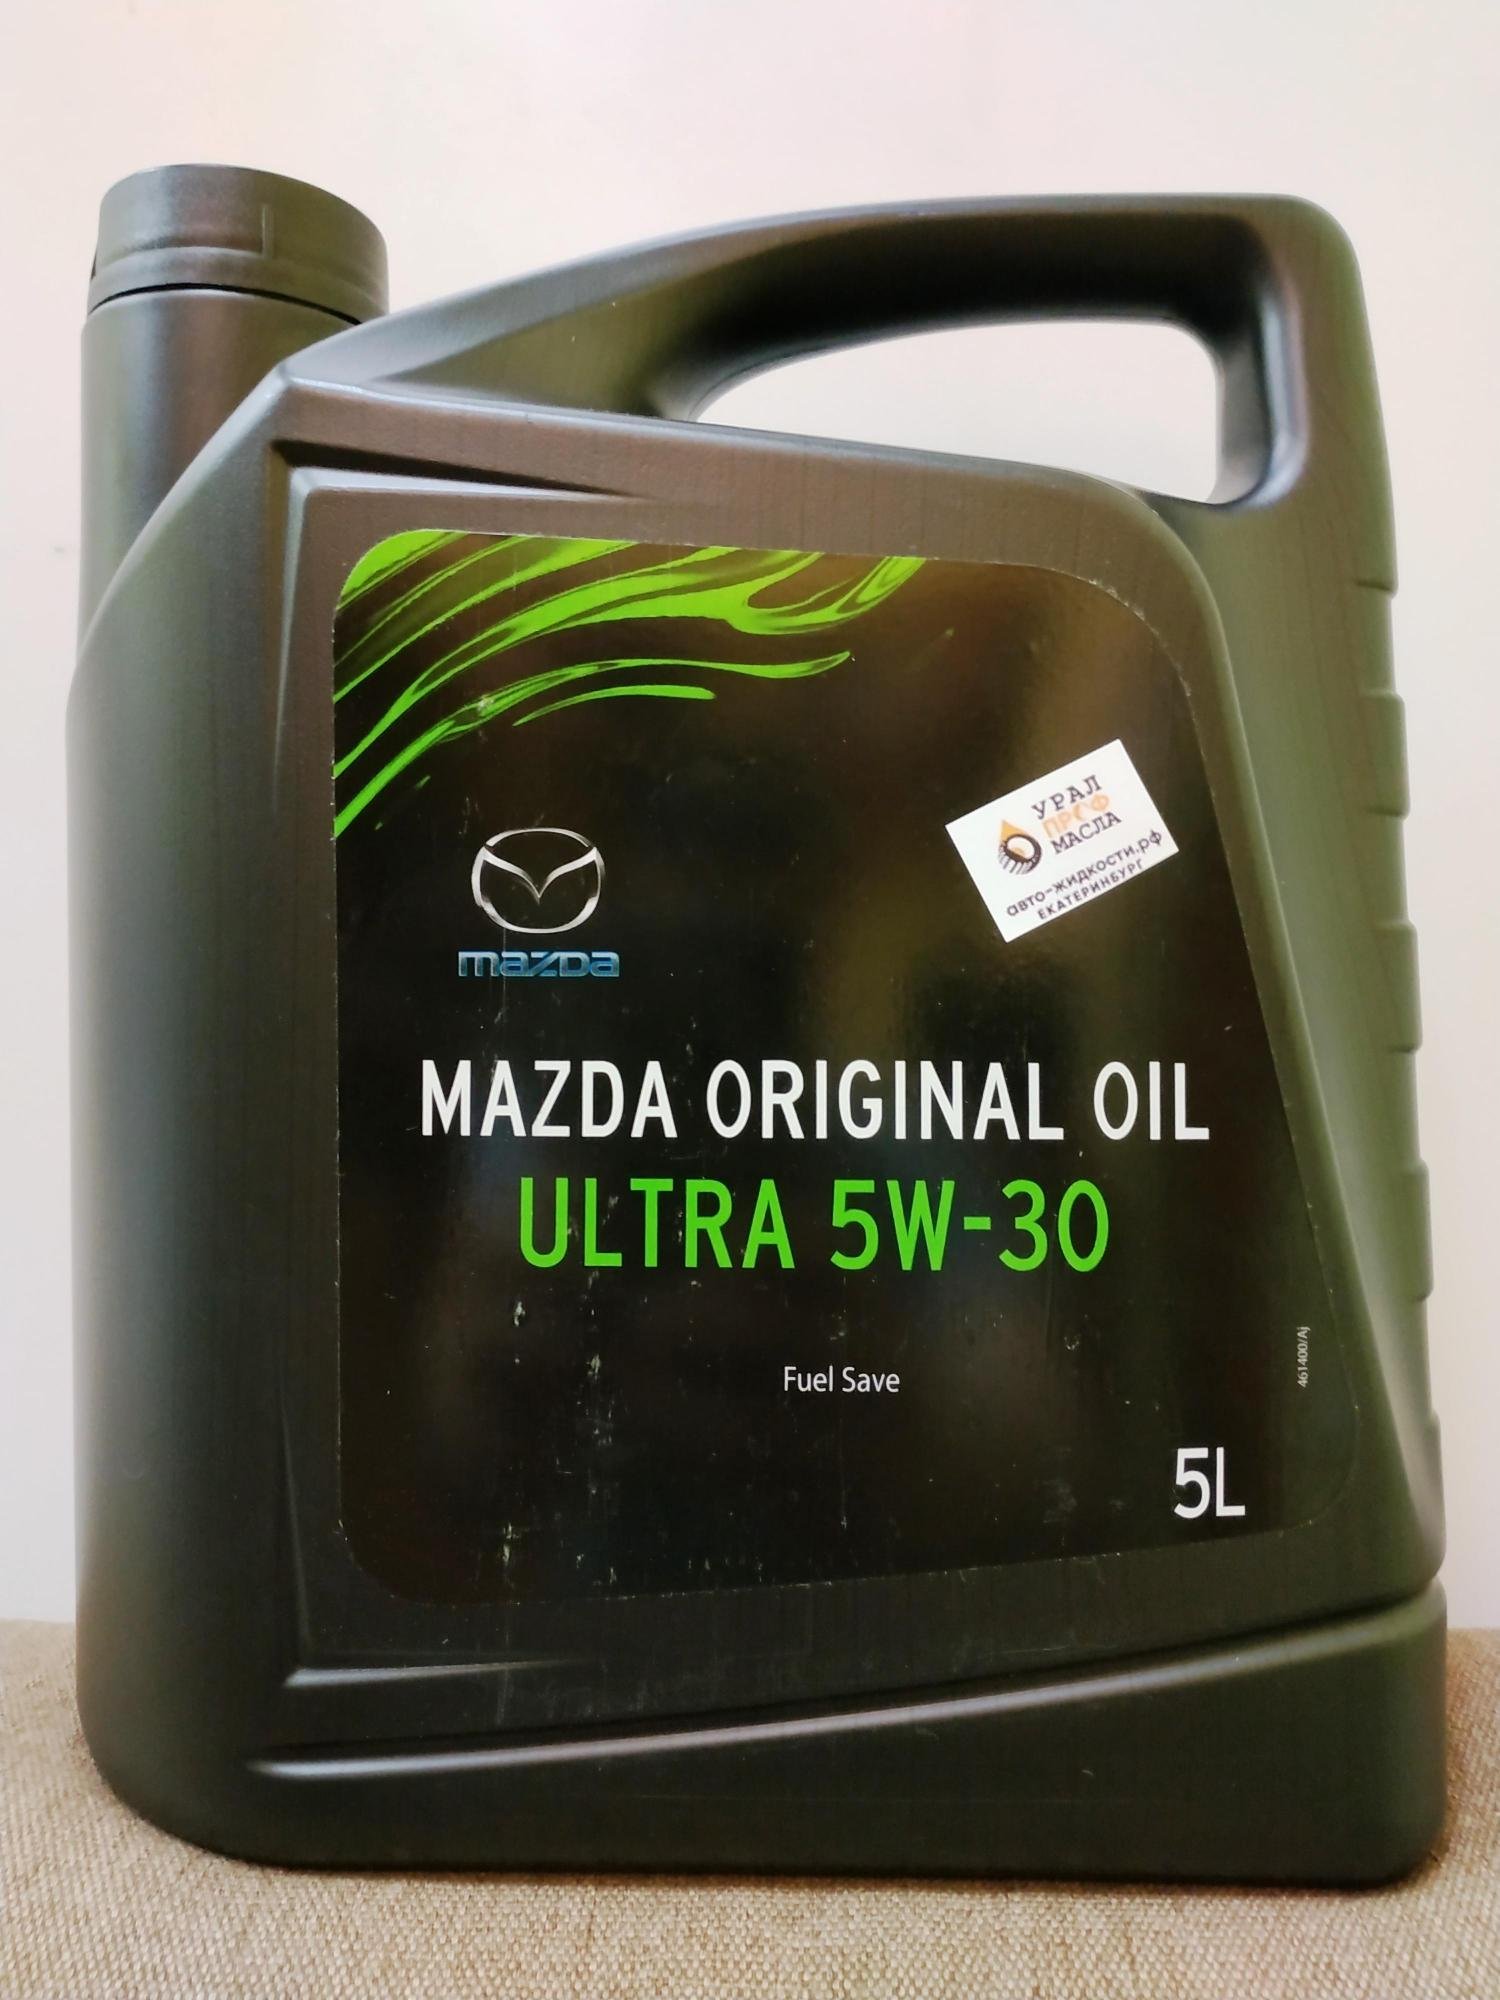 Масло ультра оригинал. Mazda Original Oil Ultra 5w-30. Original Oil Ultra 5w-30. Mazda 5w30 Original Oil Ultra новая упаковка. Масло моторное Мазда 5w30 оригинал.